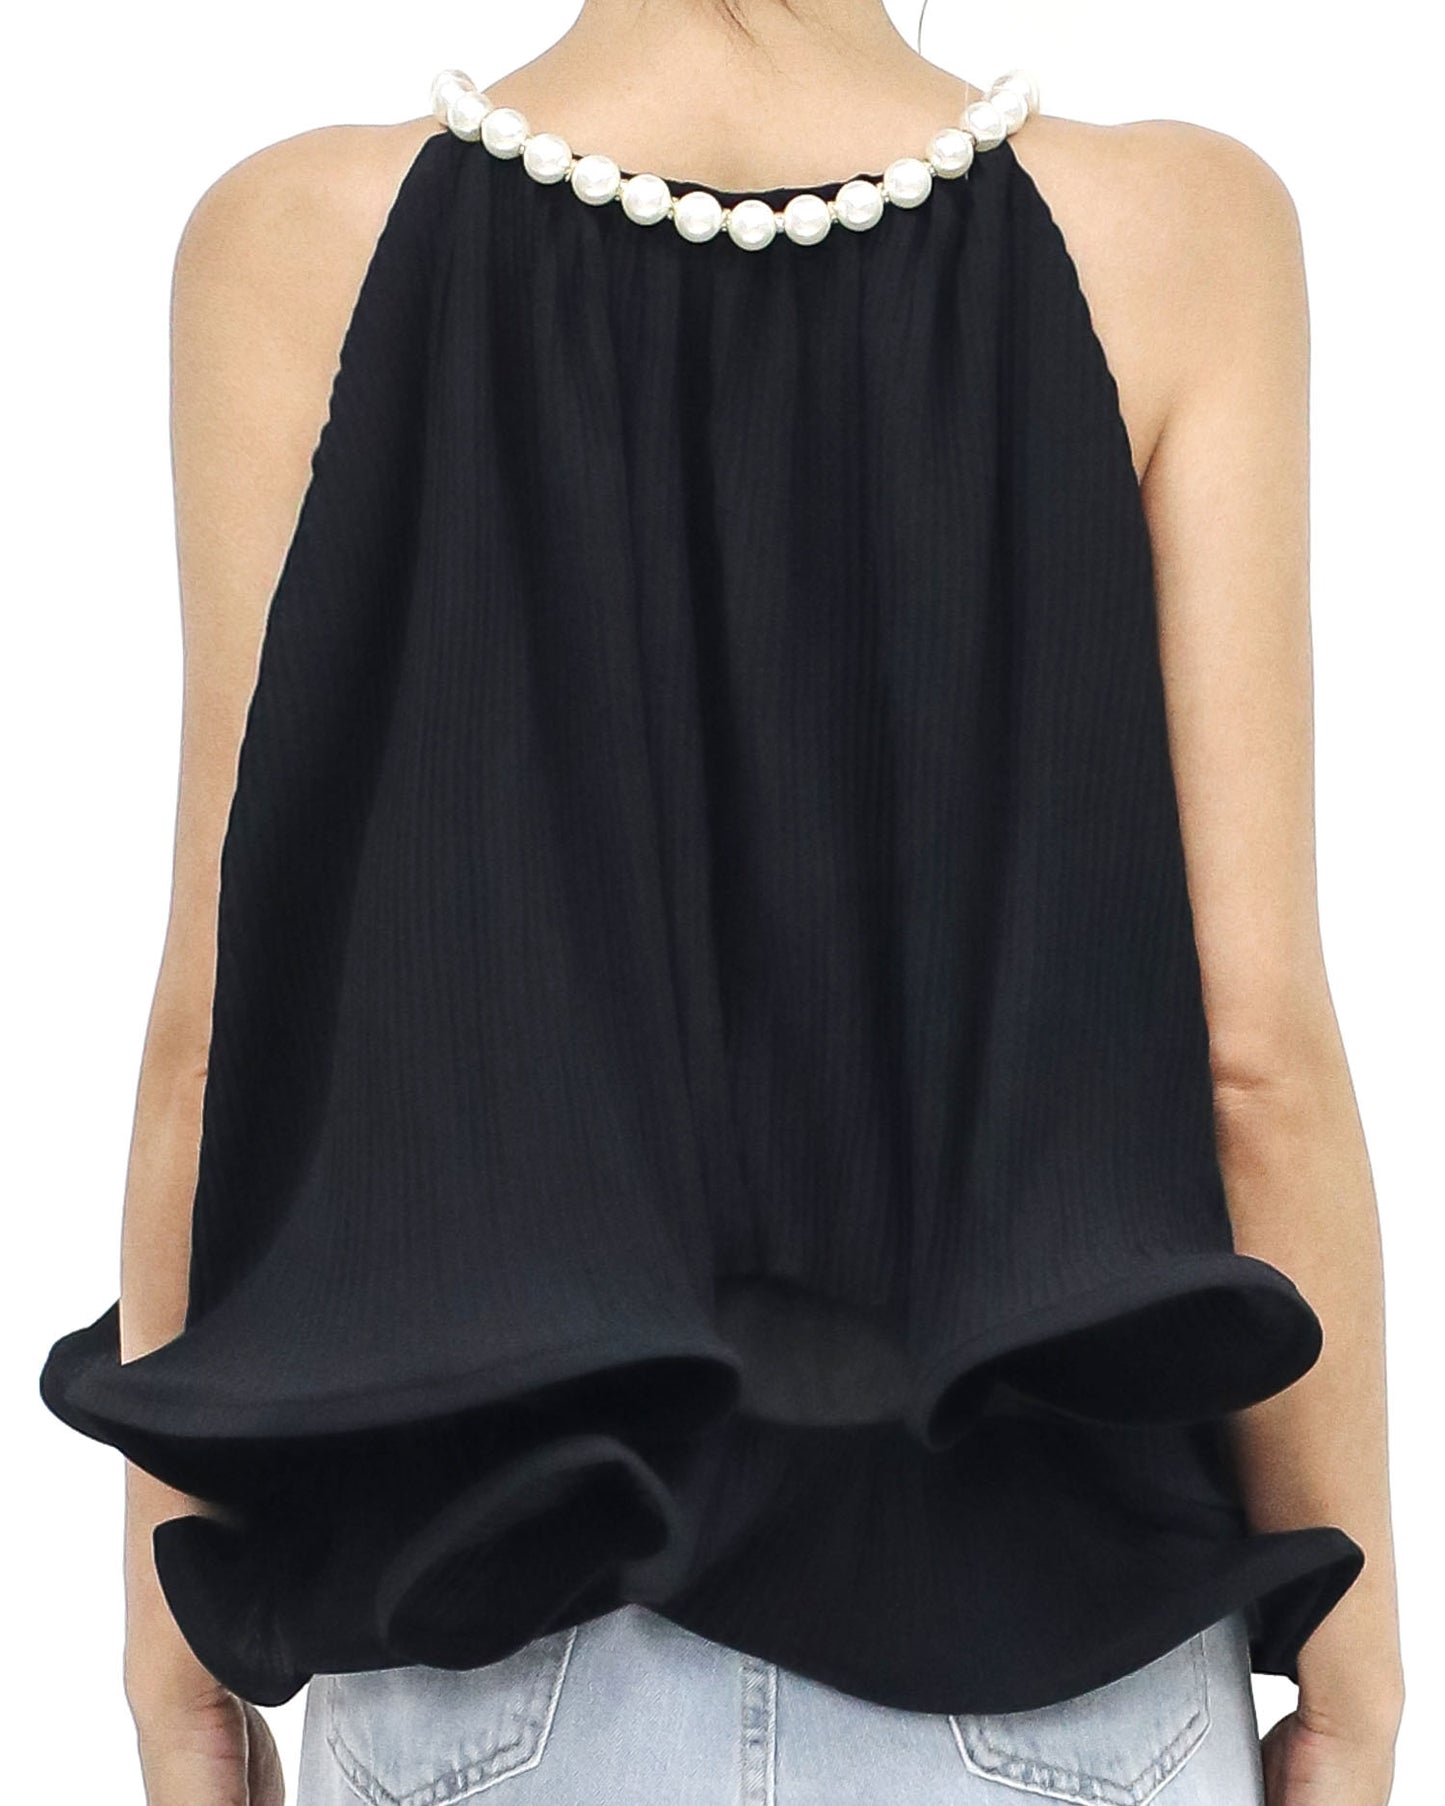 black pleats w/ pearls neckline vest *pre-order*